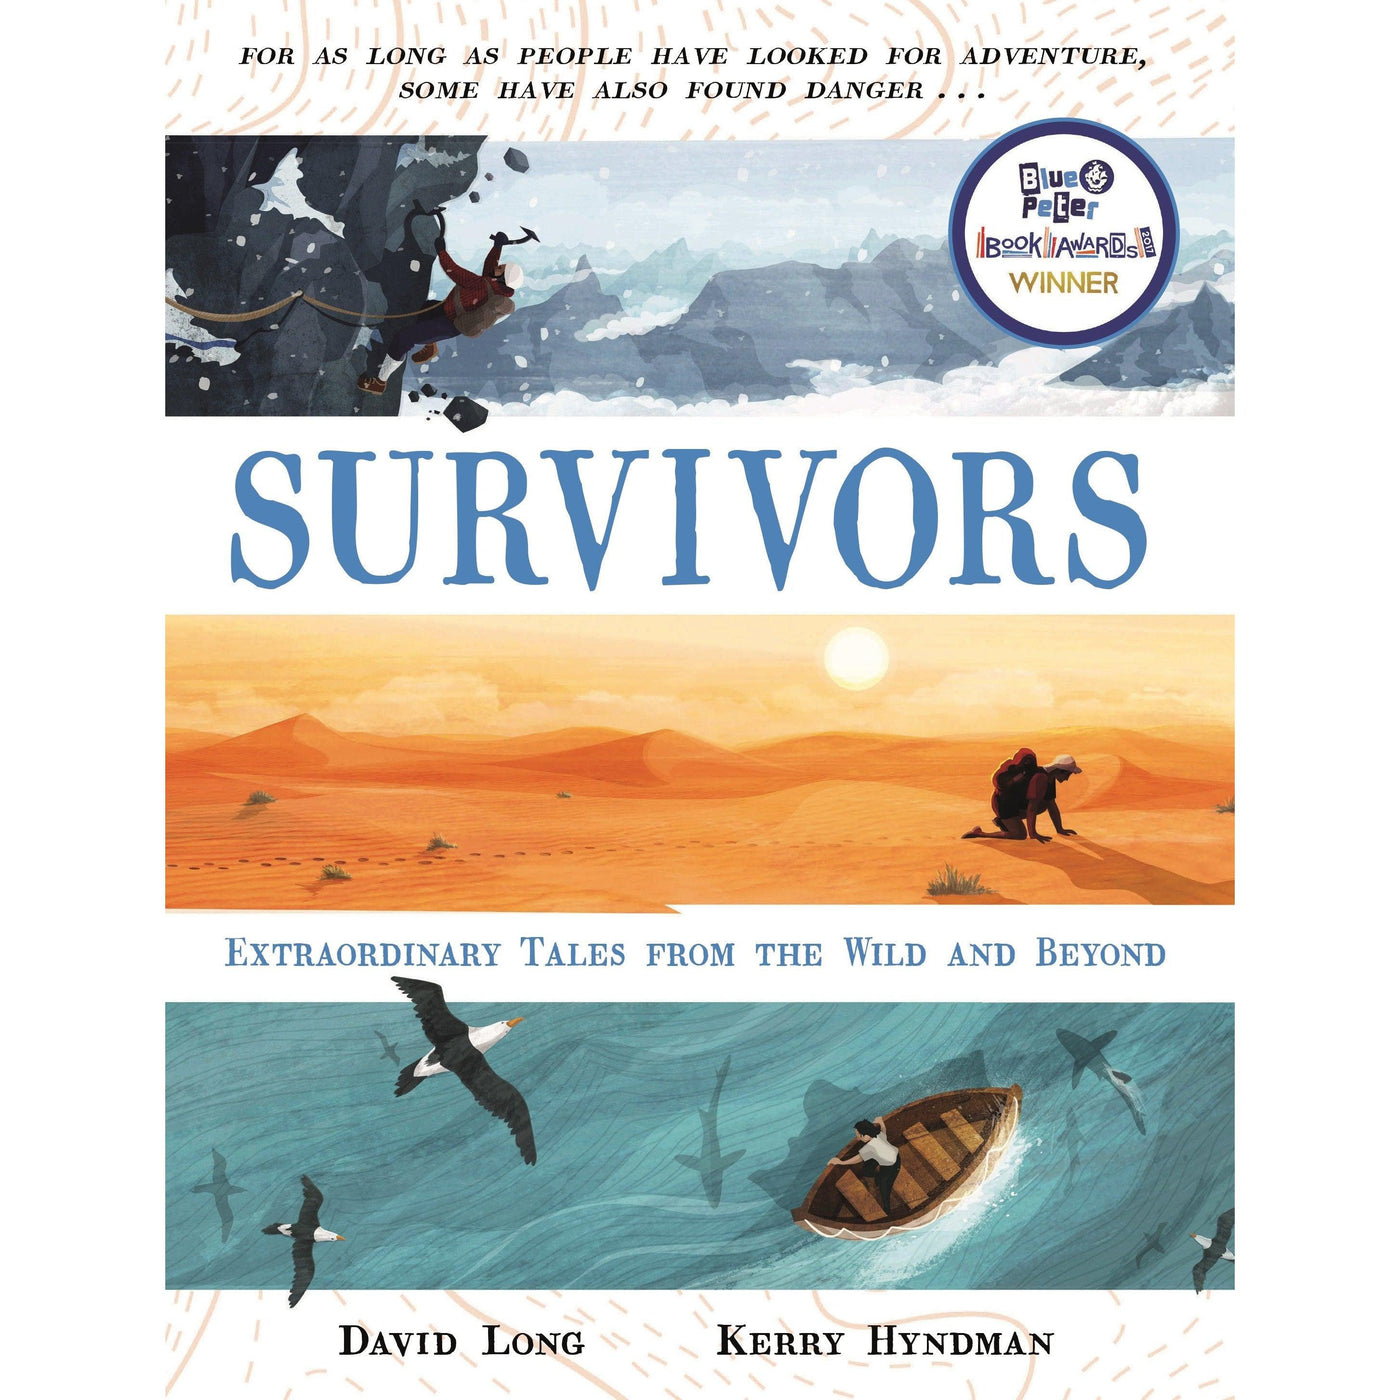 Survivors - David Long & Kerry Hyndman